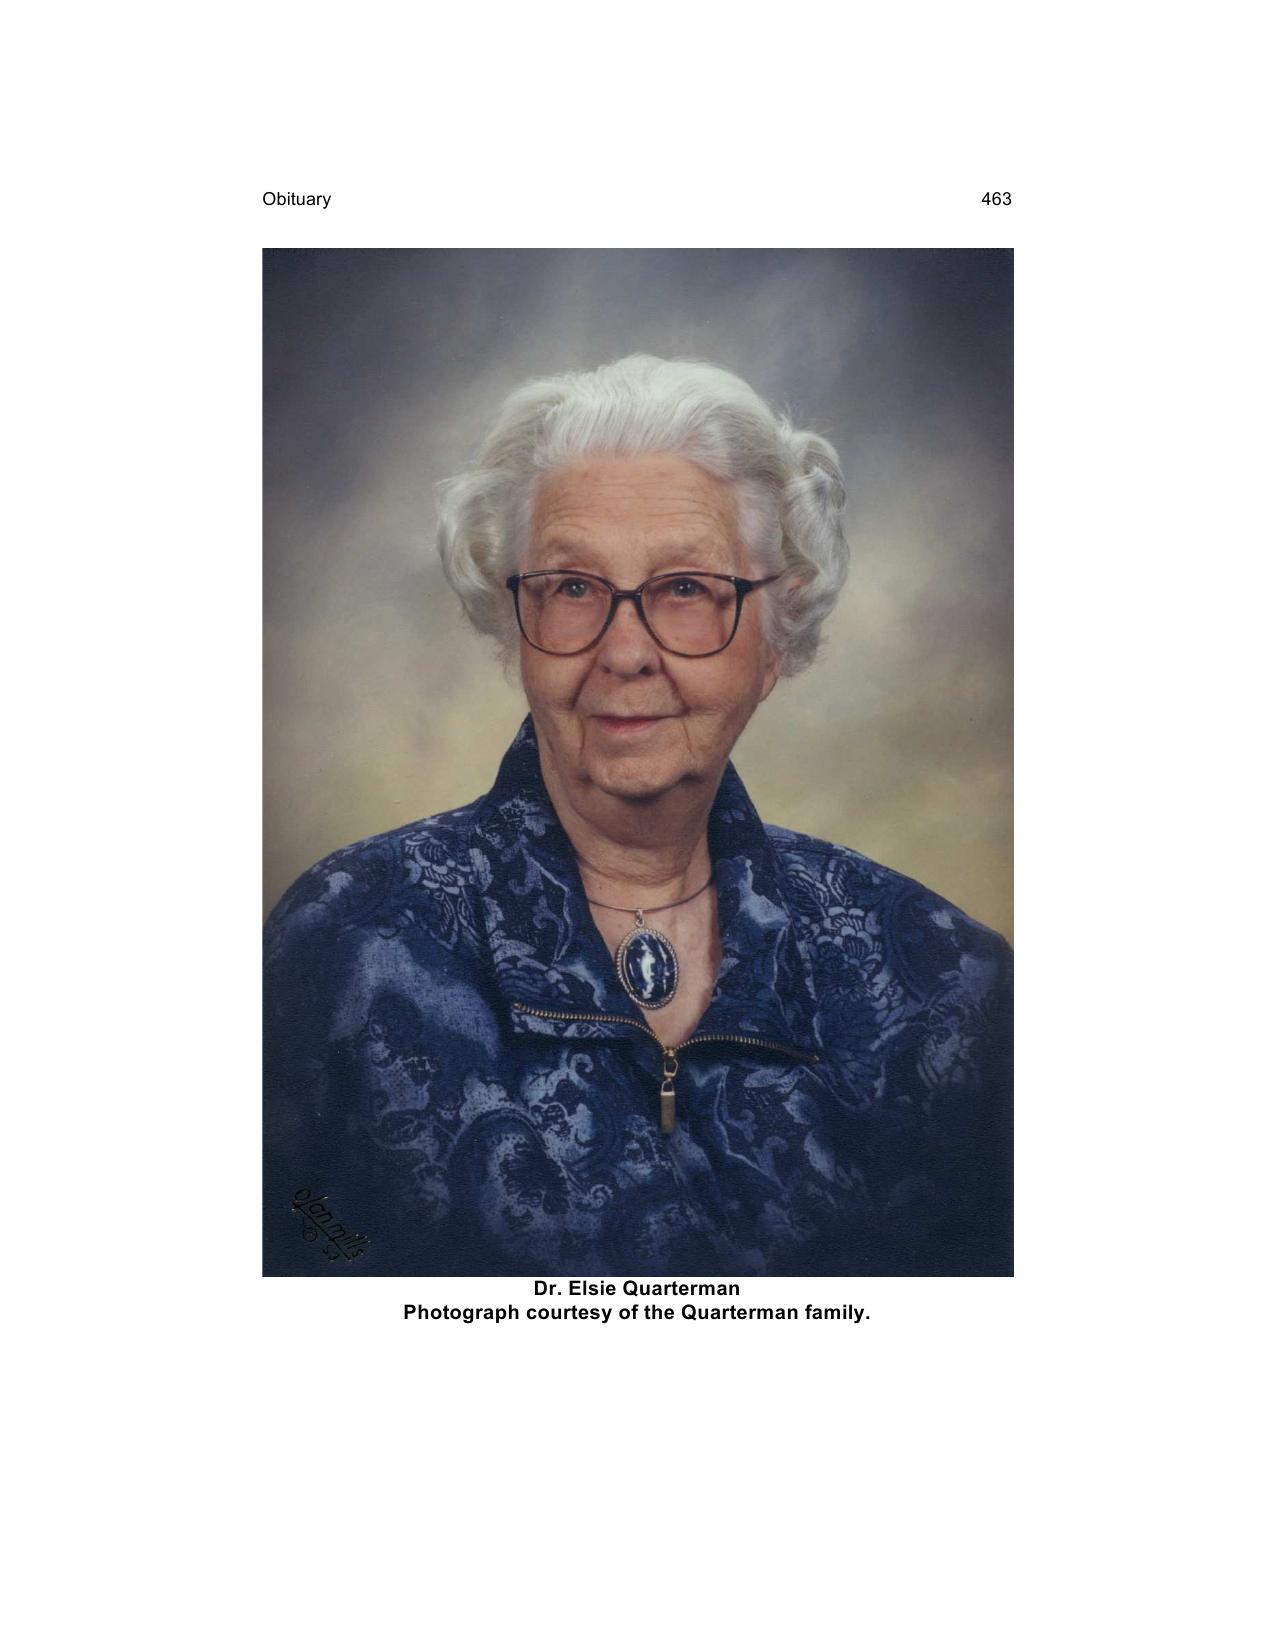 1275x1650 Photograph courtesy of the Quarterman family, in Professor Elsie Quarterman: In Memorium, 1910-2014, by John S. Quarterman, July 2014